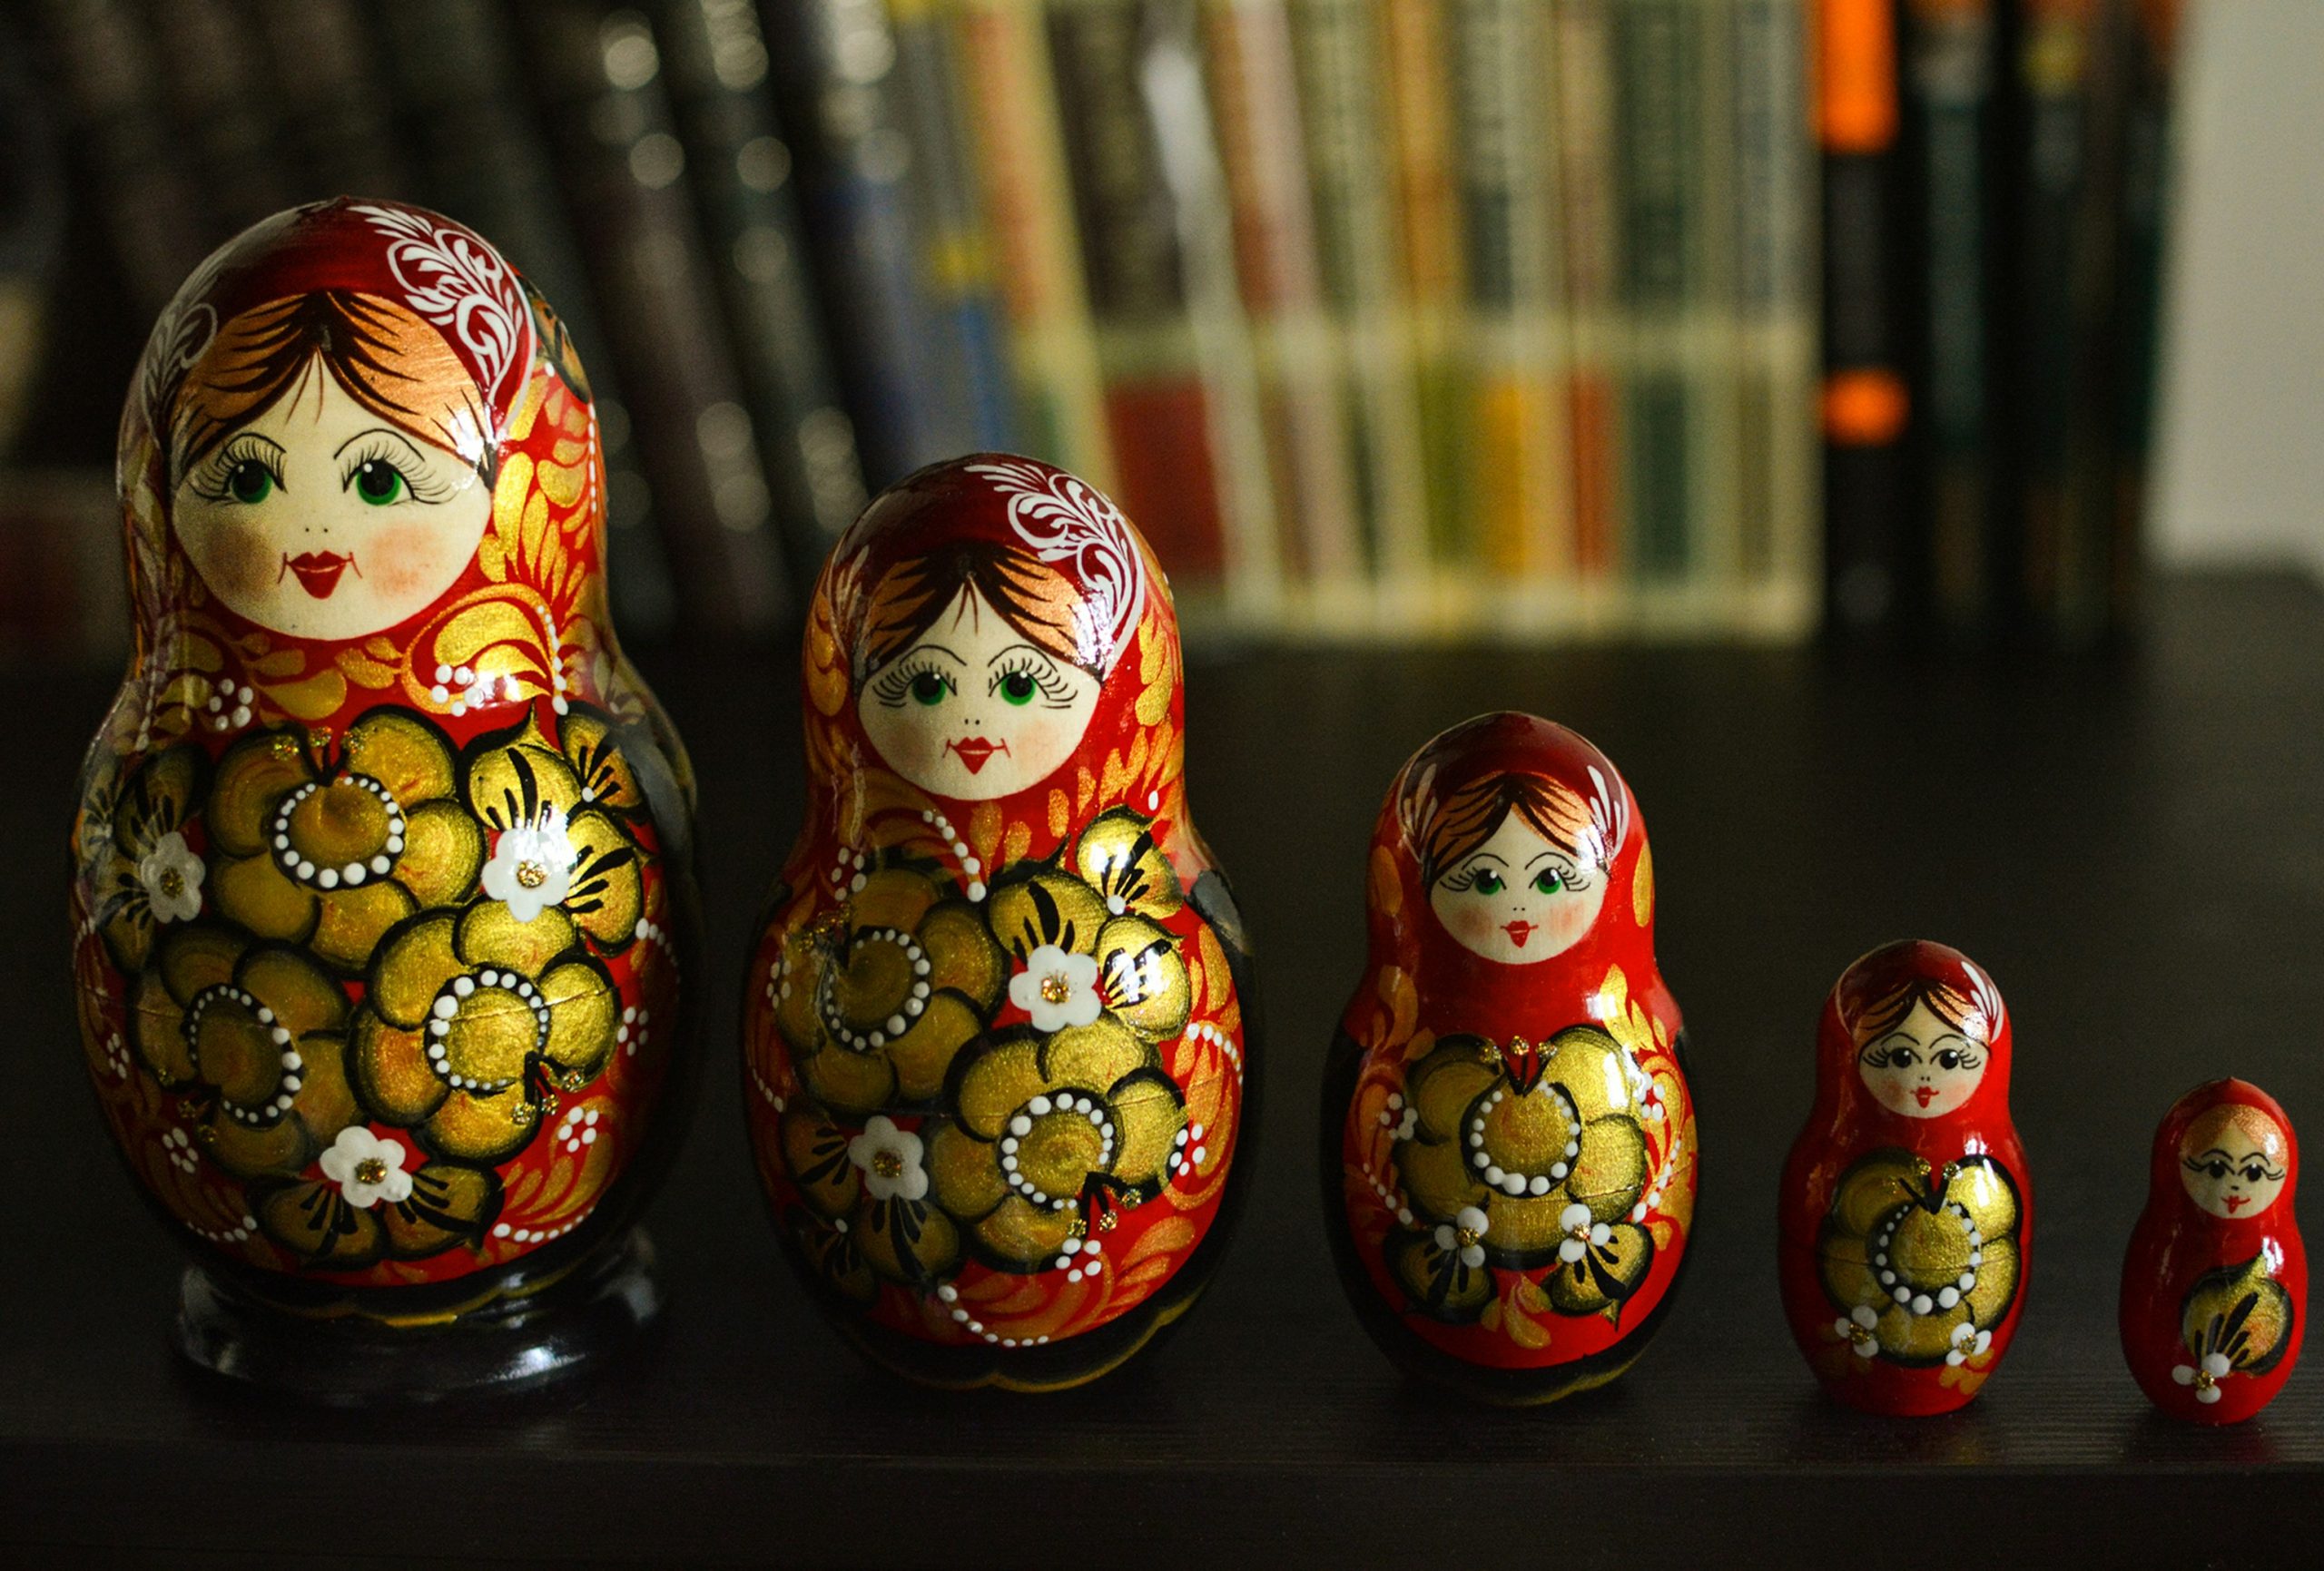 A set of Russian nesting dolls